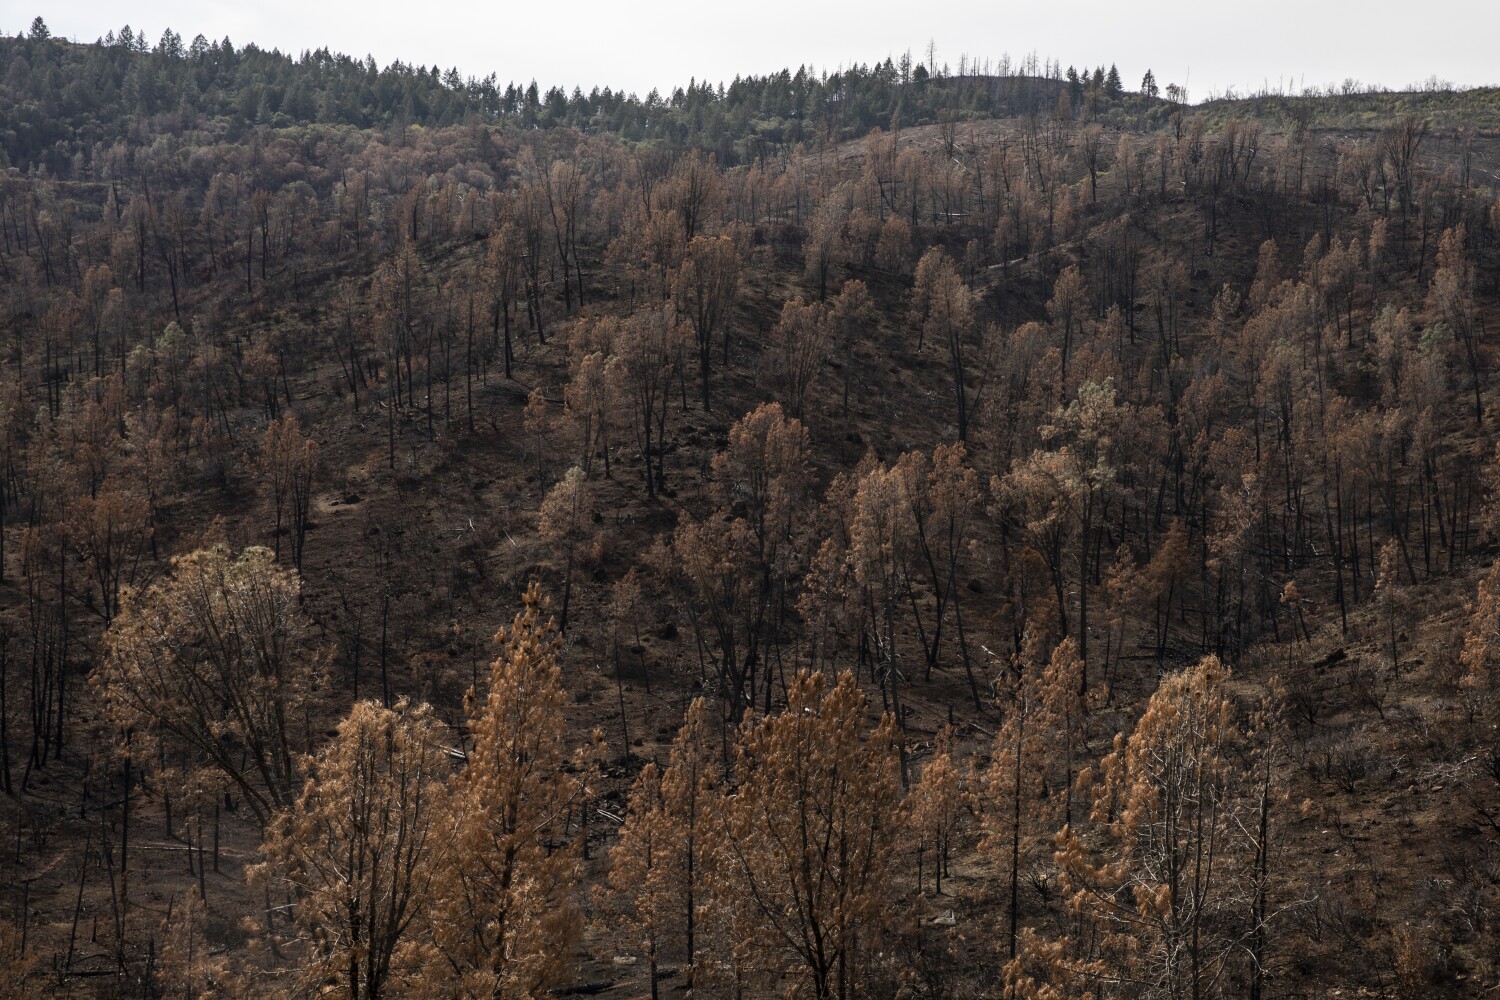 Judge pauses California luxury development over wildfire evacuation concerns